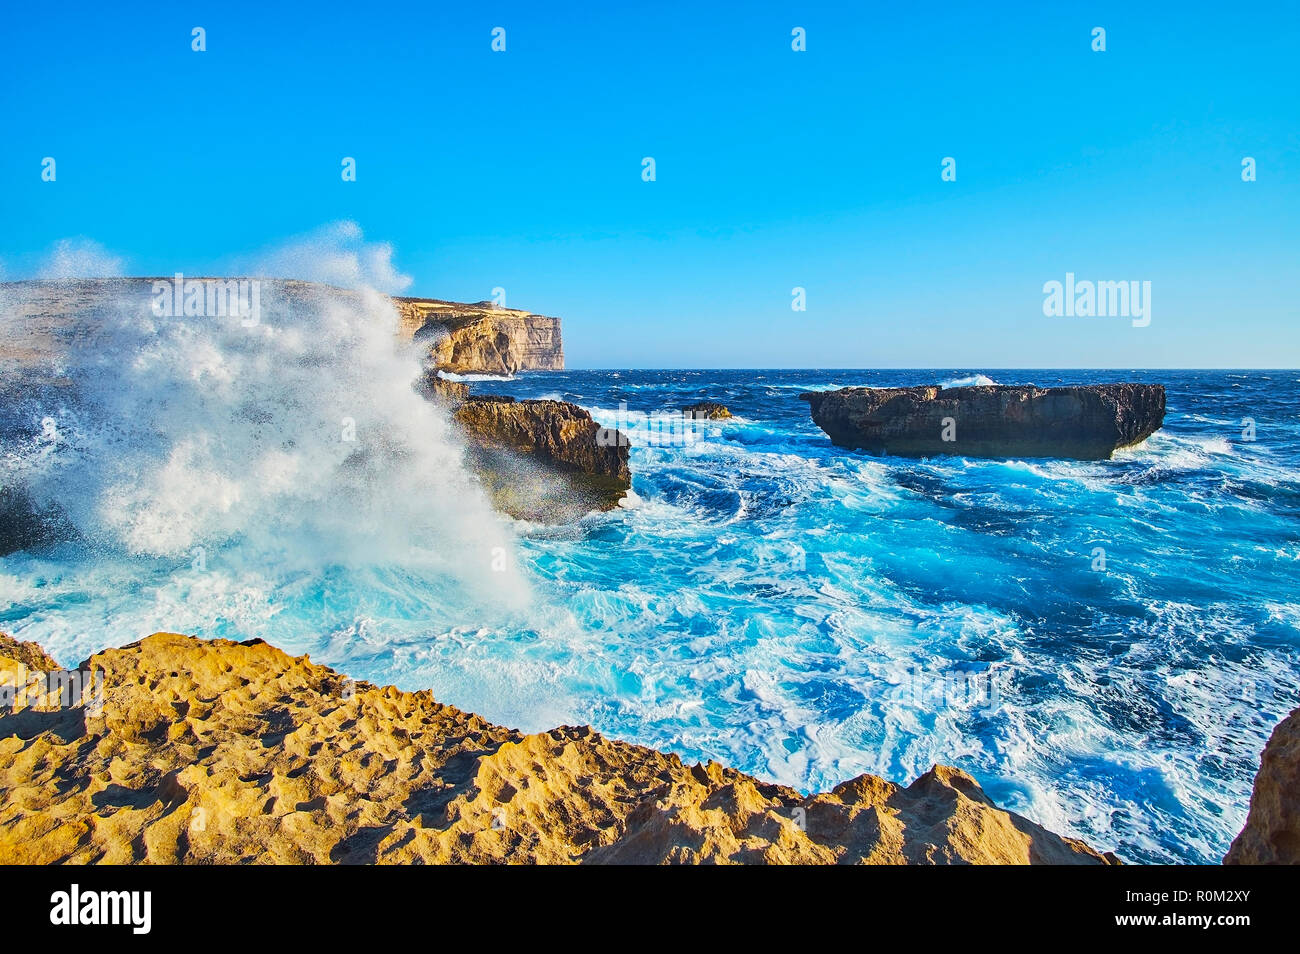 The stormy waves with white splashes cover the rocky coast of San Lawrenz, neighboring with Azure Window (Dwejra) site, Gozo, Malta. Stock Photo